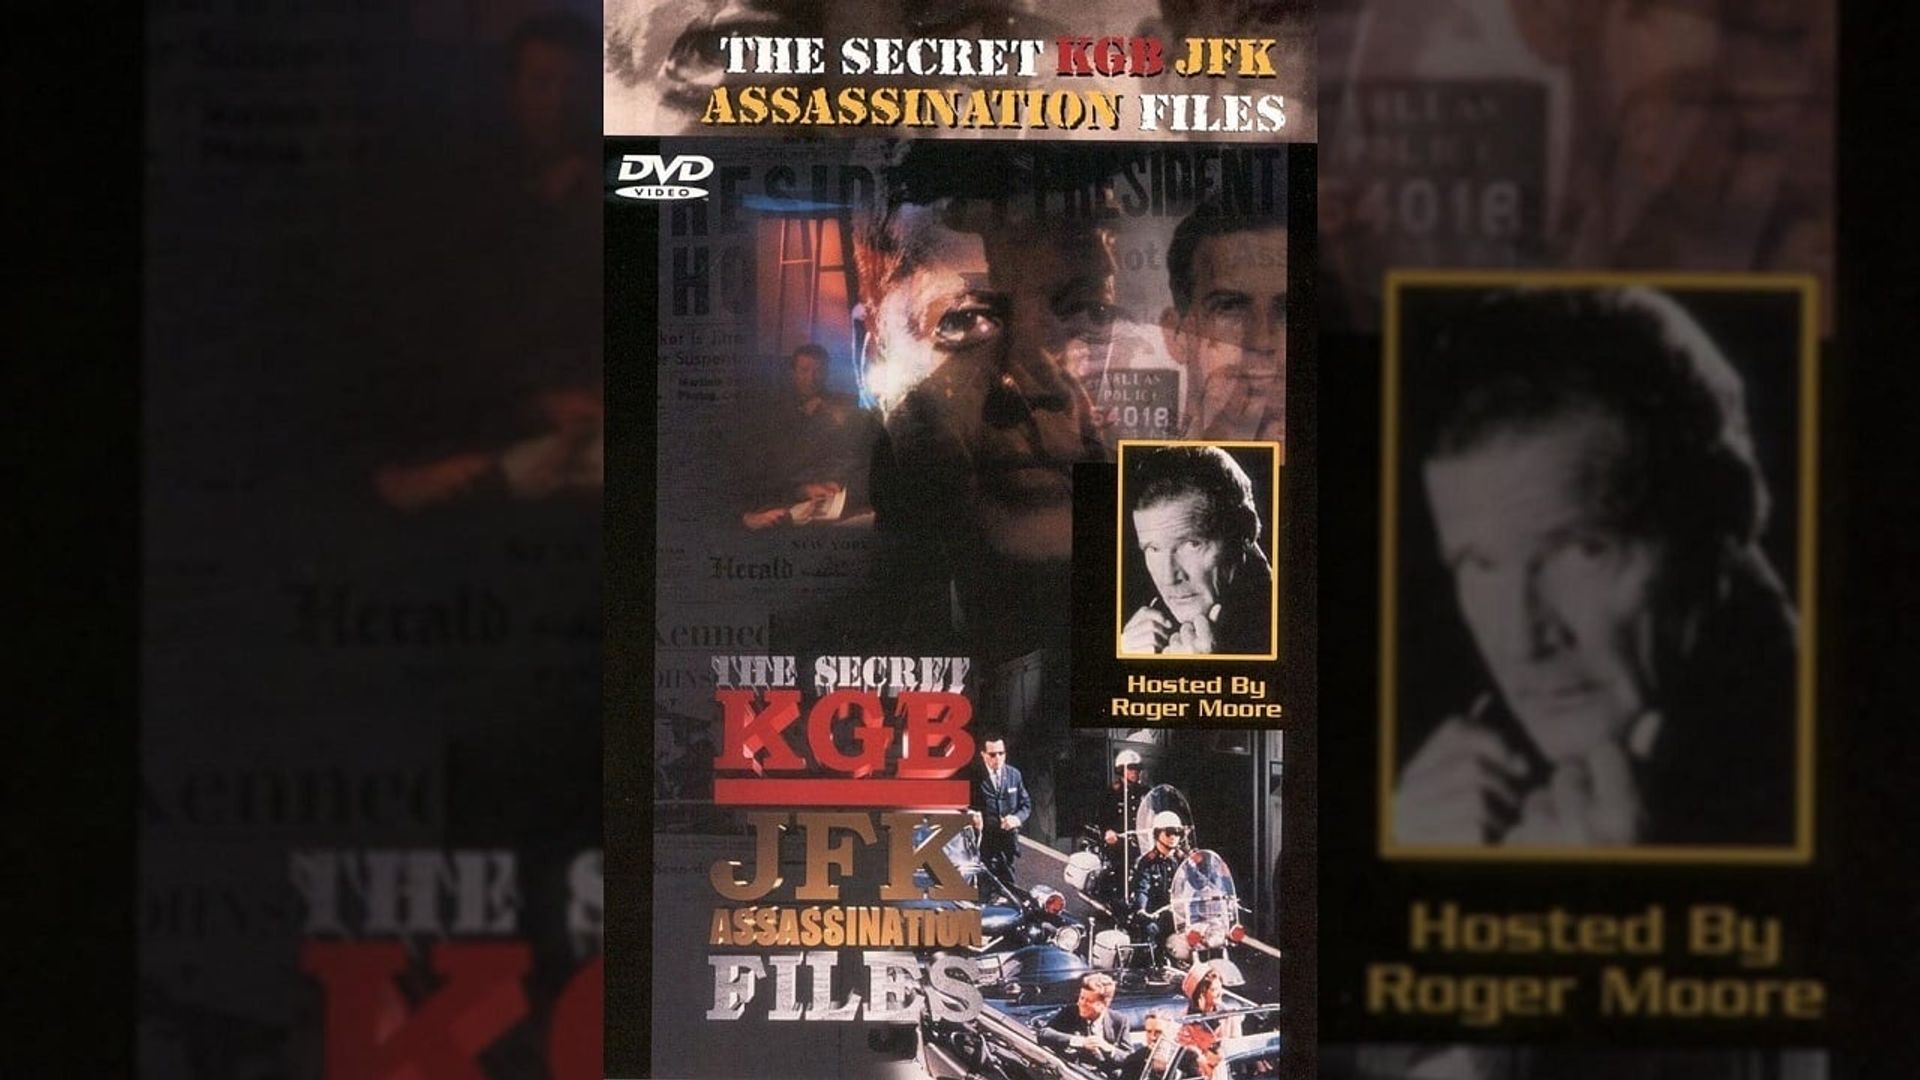 The Secret KGB JFK Assassination Files background